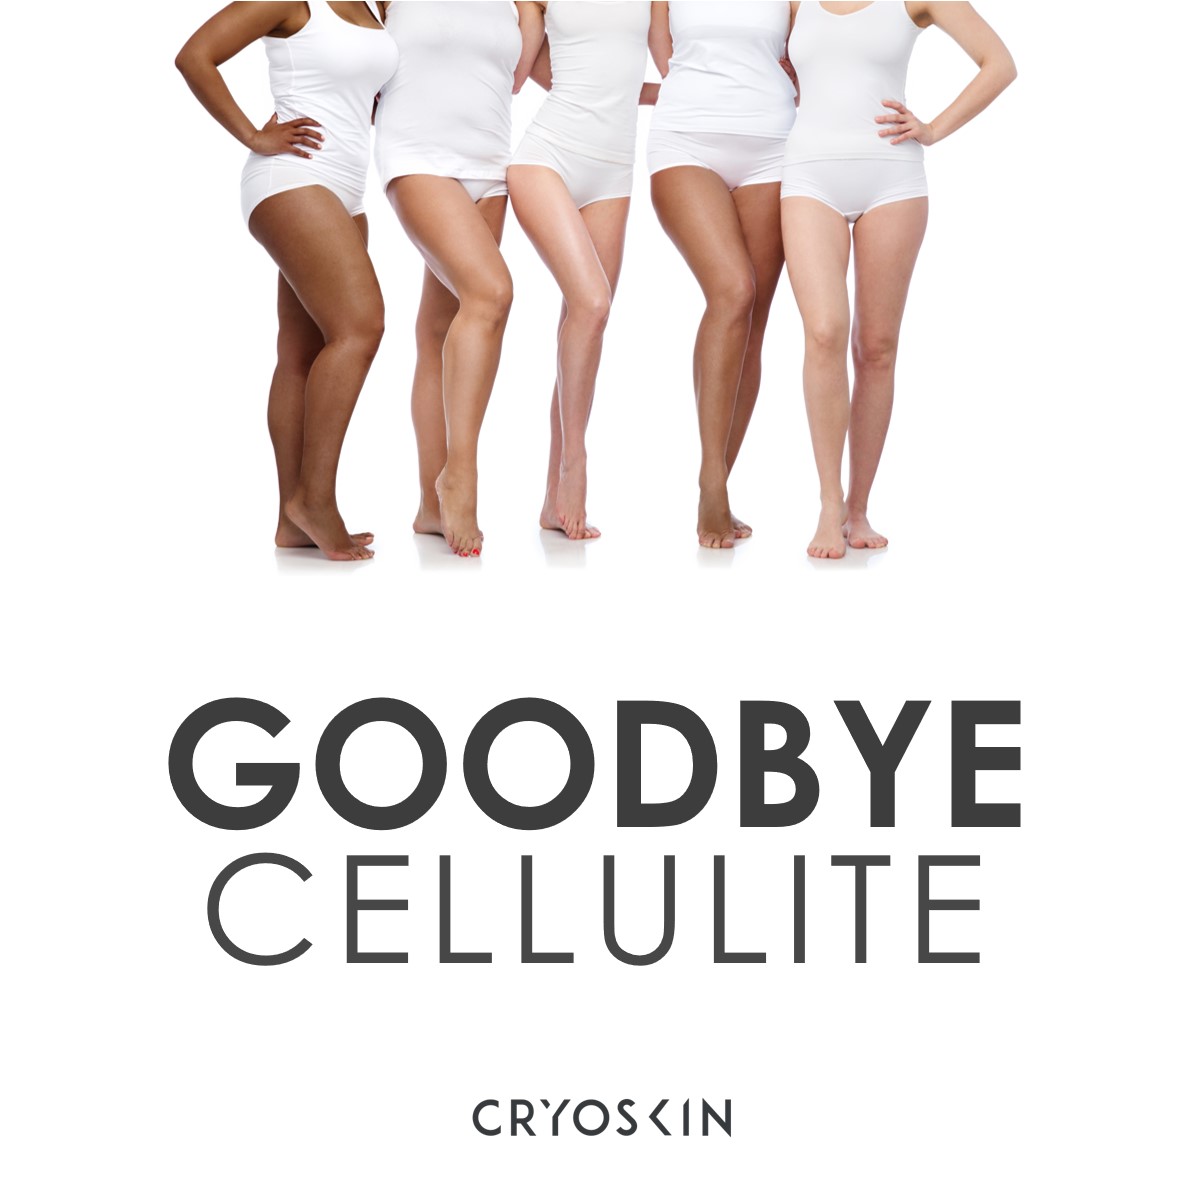 Good Bye Cellulite 600x600.jpg